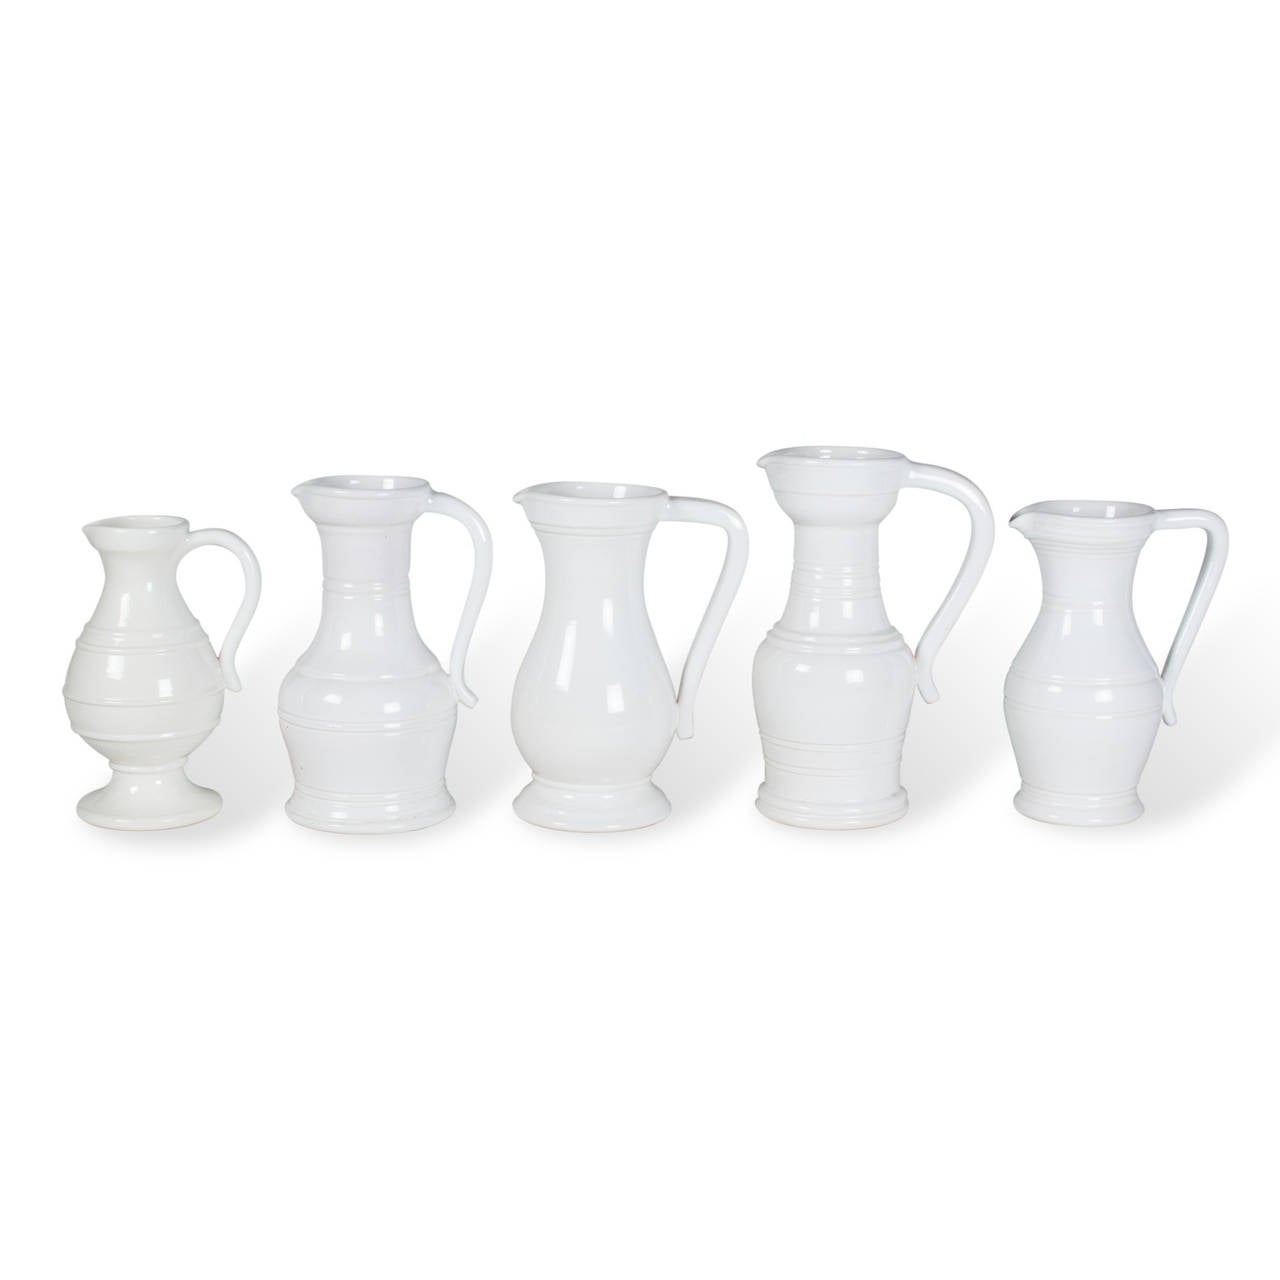 Set of five white ceramic 